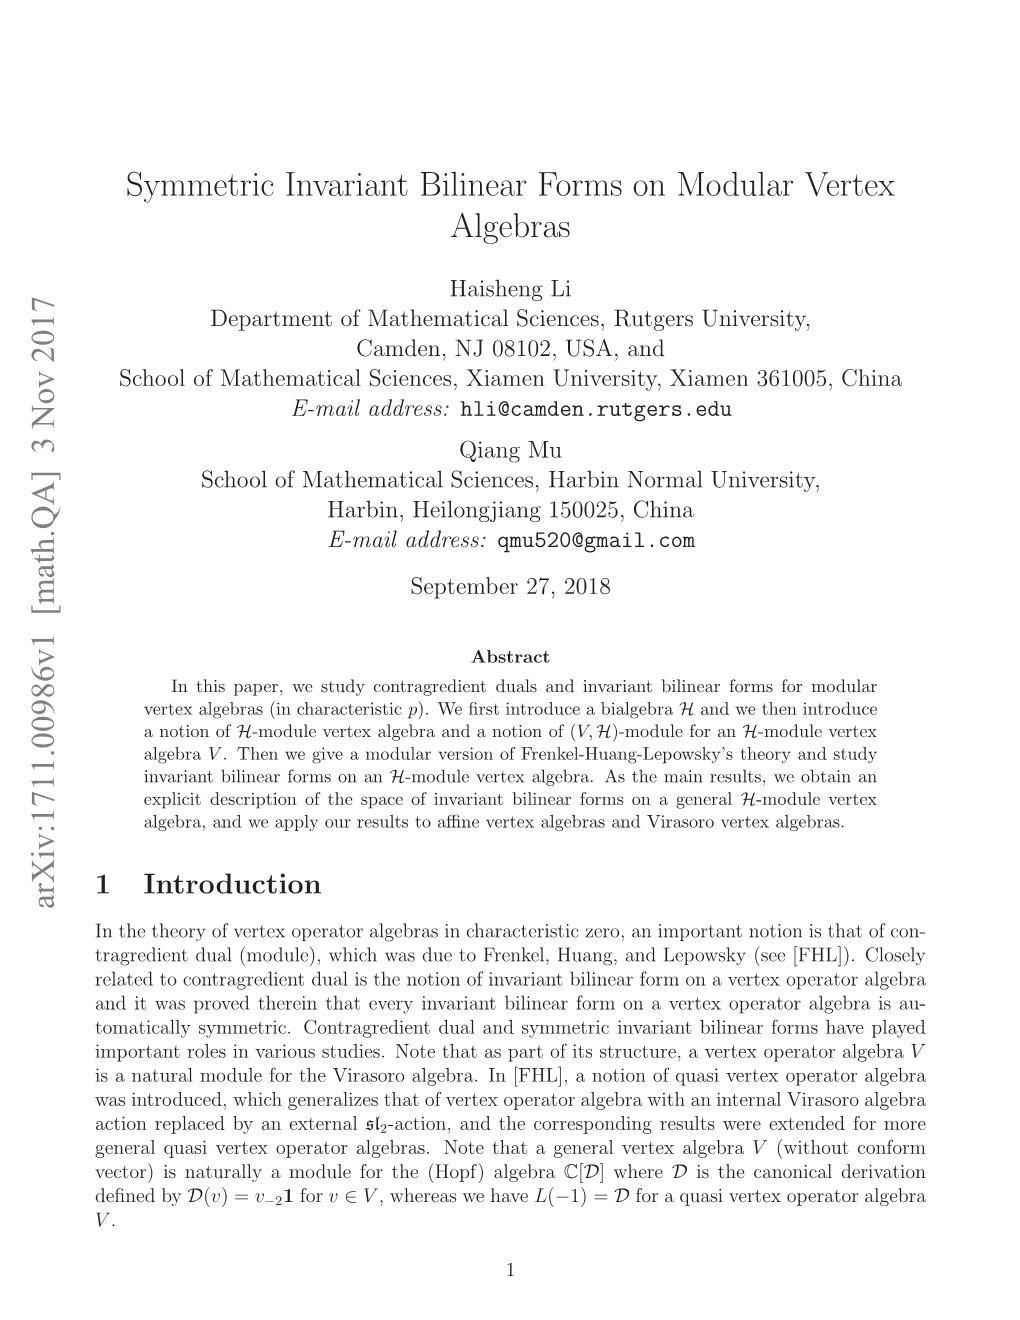 Symmetric Invariant Bilinear Forms on Modular Vertex Algebras